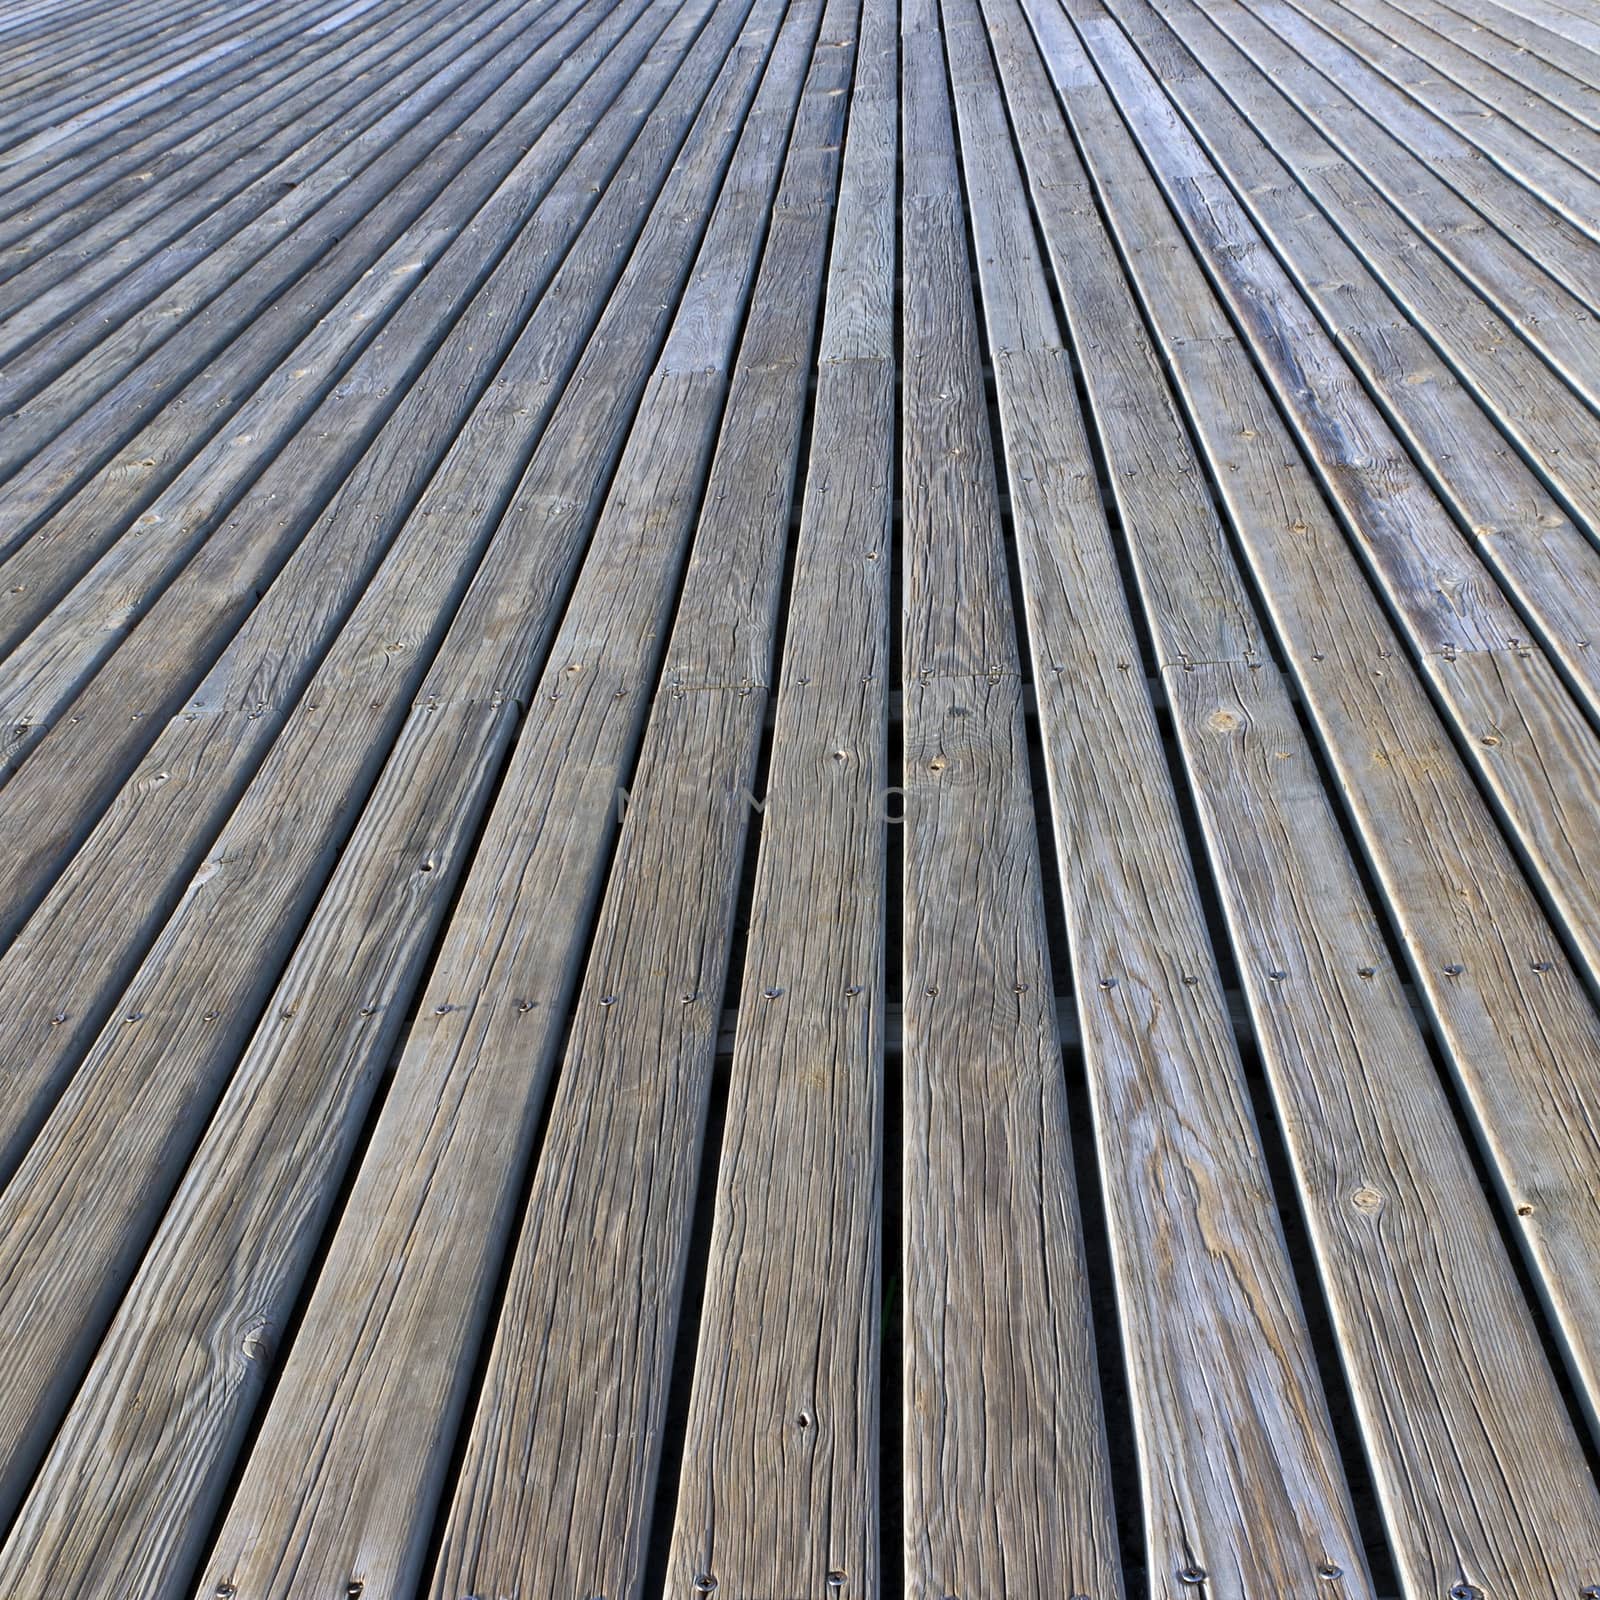 hardwood old plank wooden floor perspective by Vladyslav